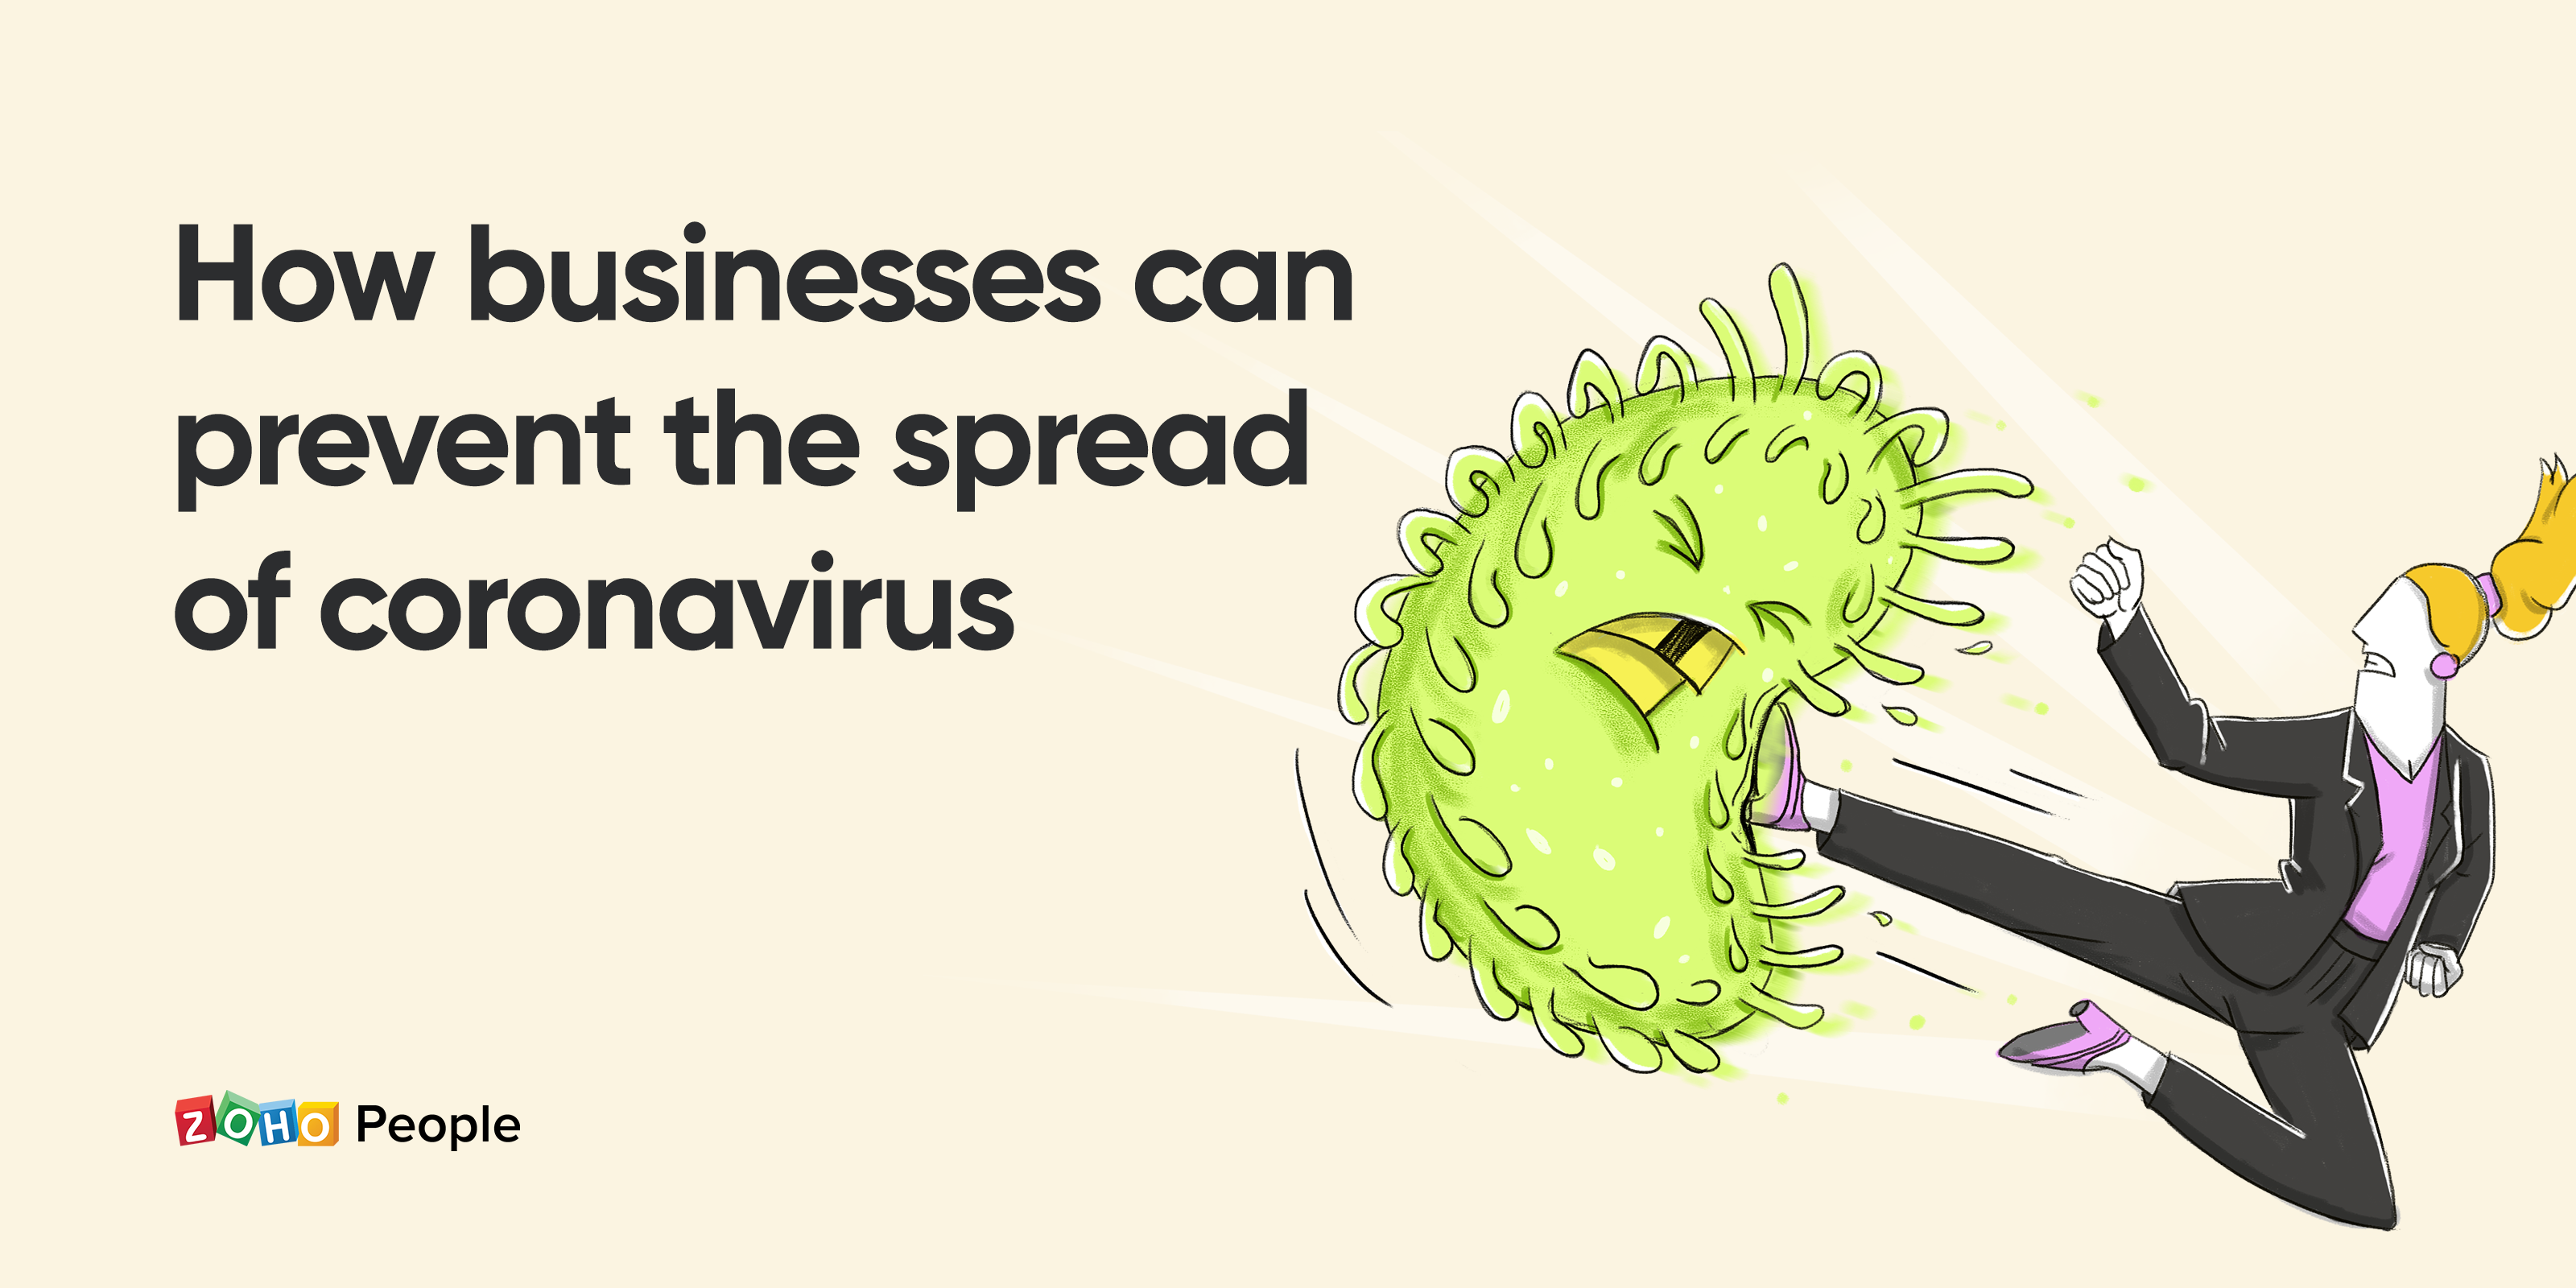 How to prevent the spread of the coronavirus